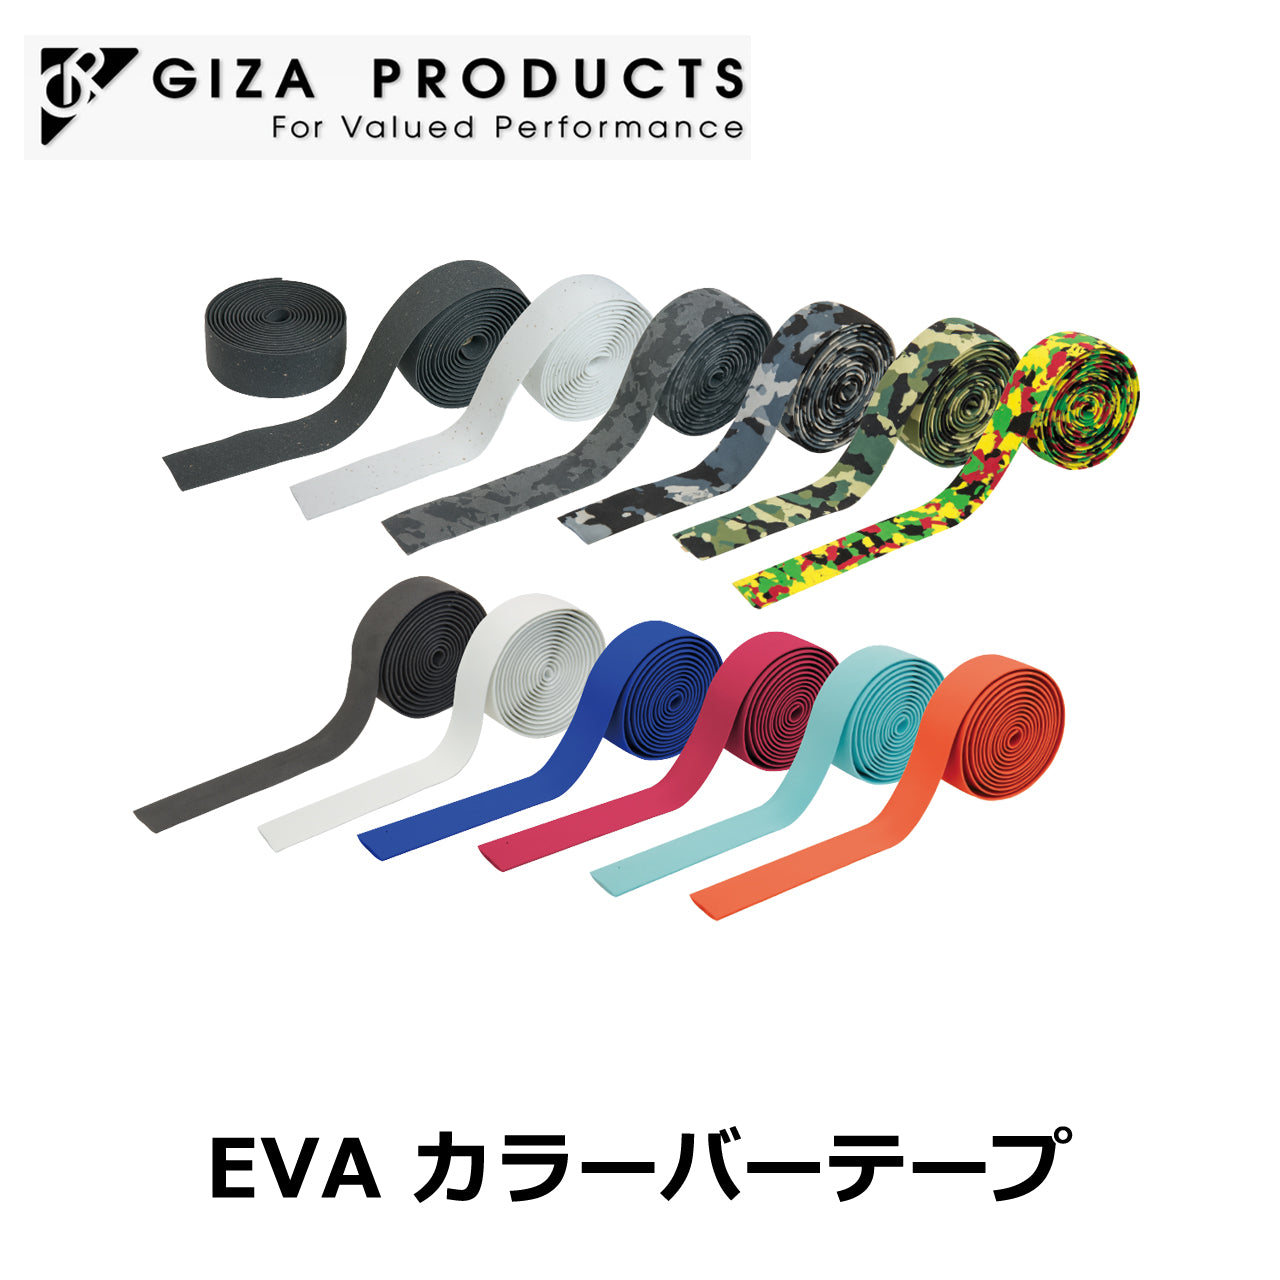 GIZA PRODUCTS GIZA PRODUCTS(ギザ プロダクツ) VLT-001 EVA カラー バーテープ　オレンジ HBT02319